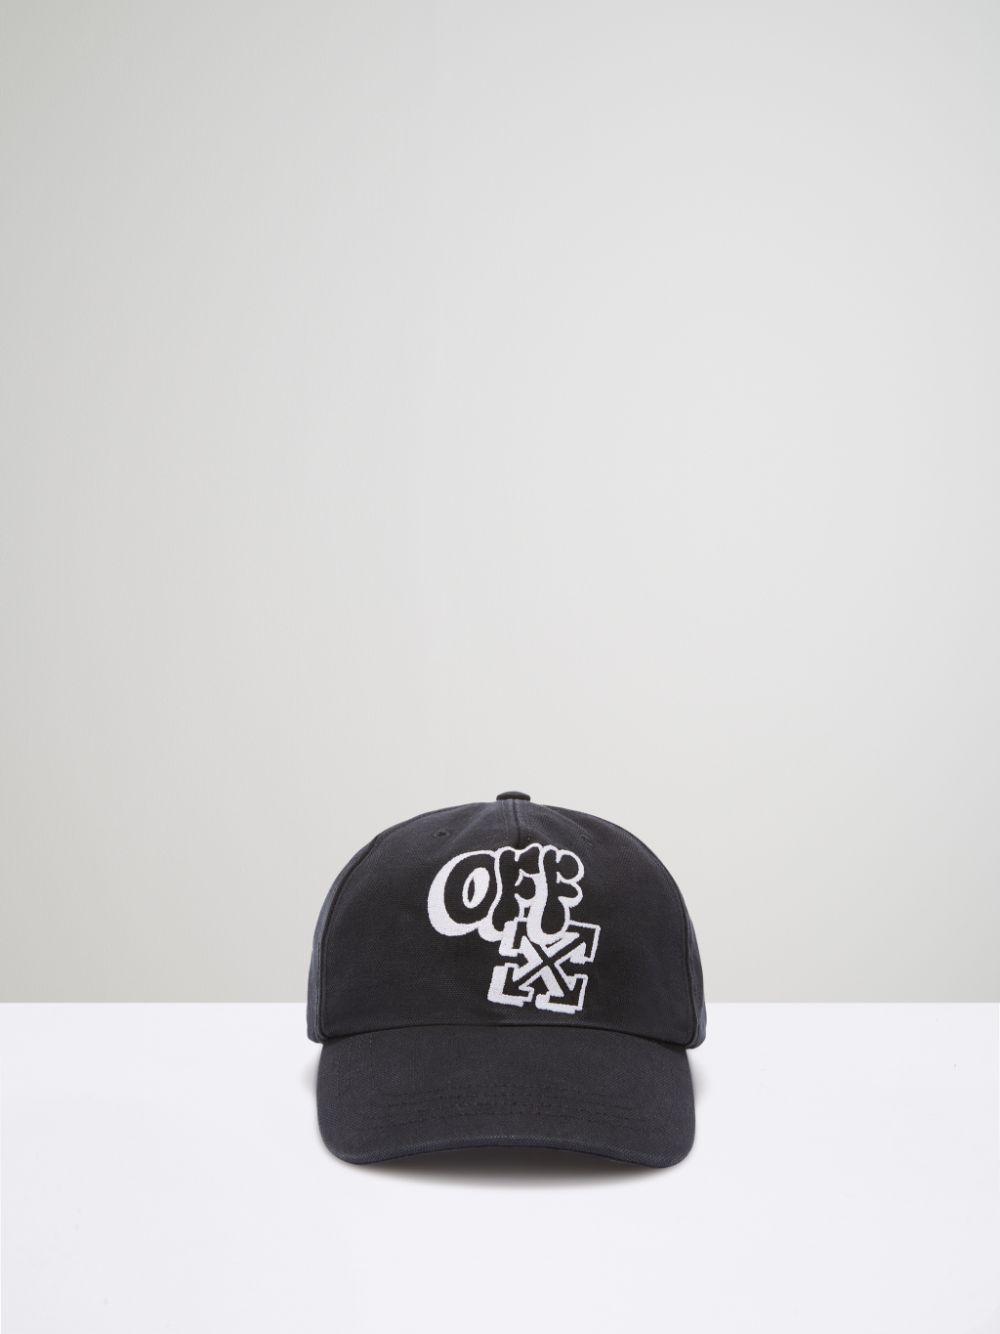 Off-White™ c/o "Style in Revolt" Logo Cap